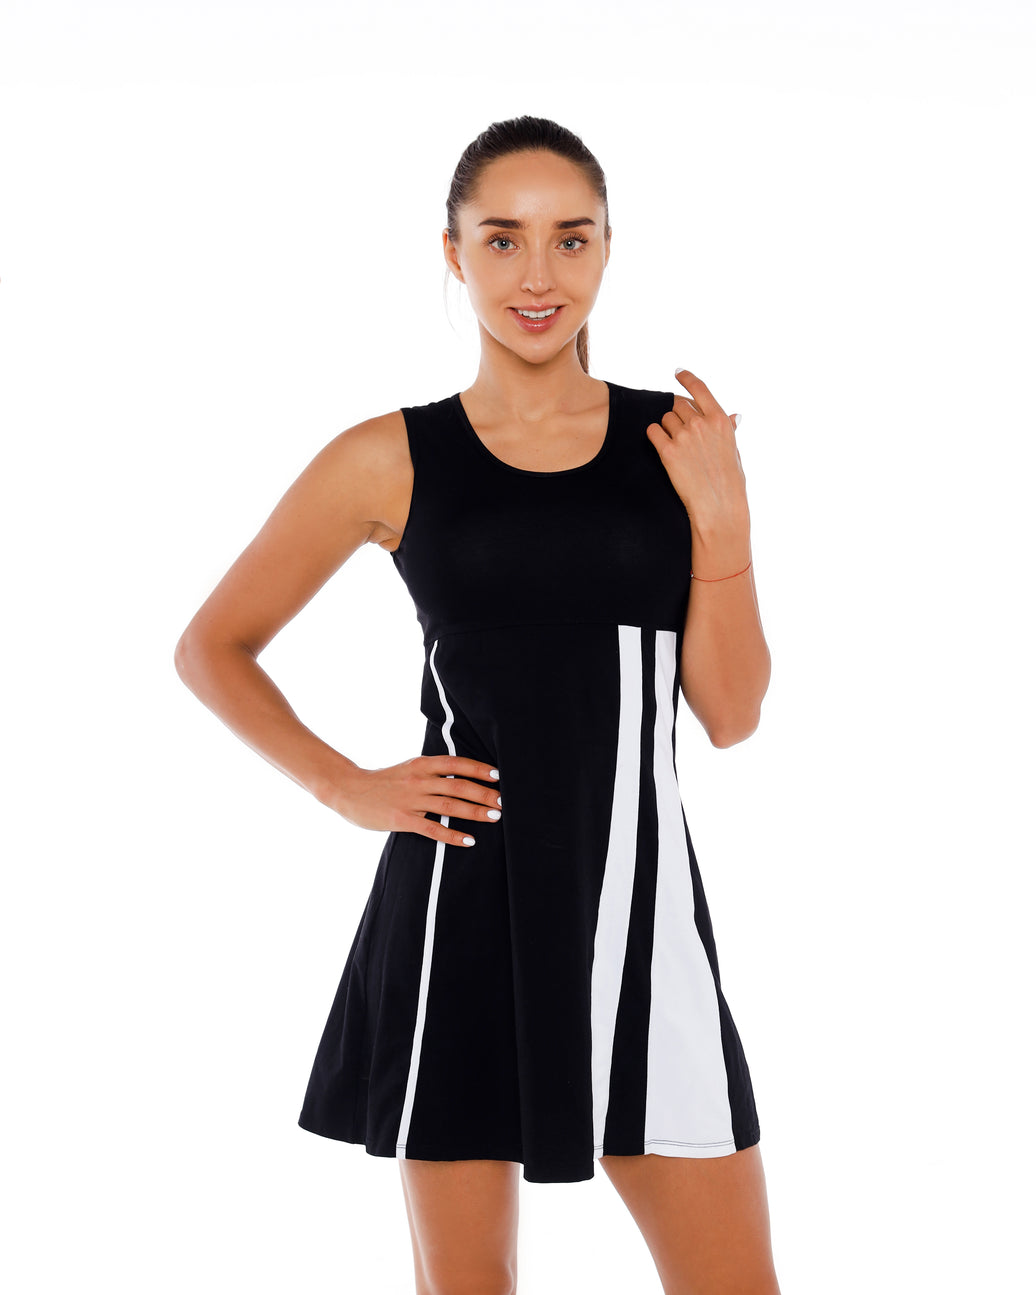 Tennis dress with stripes